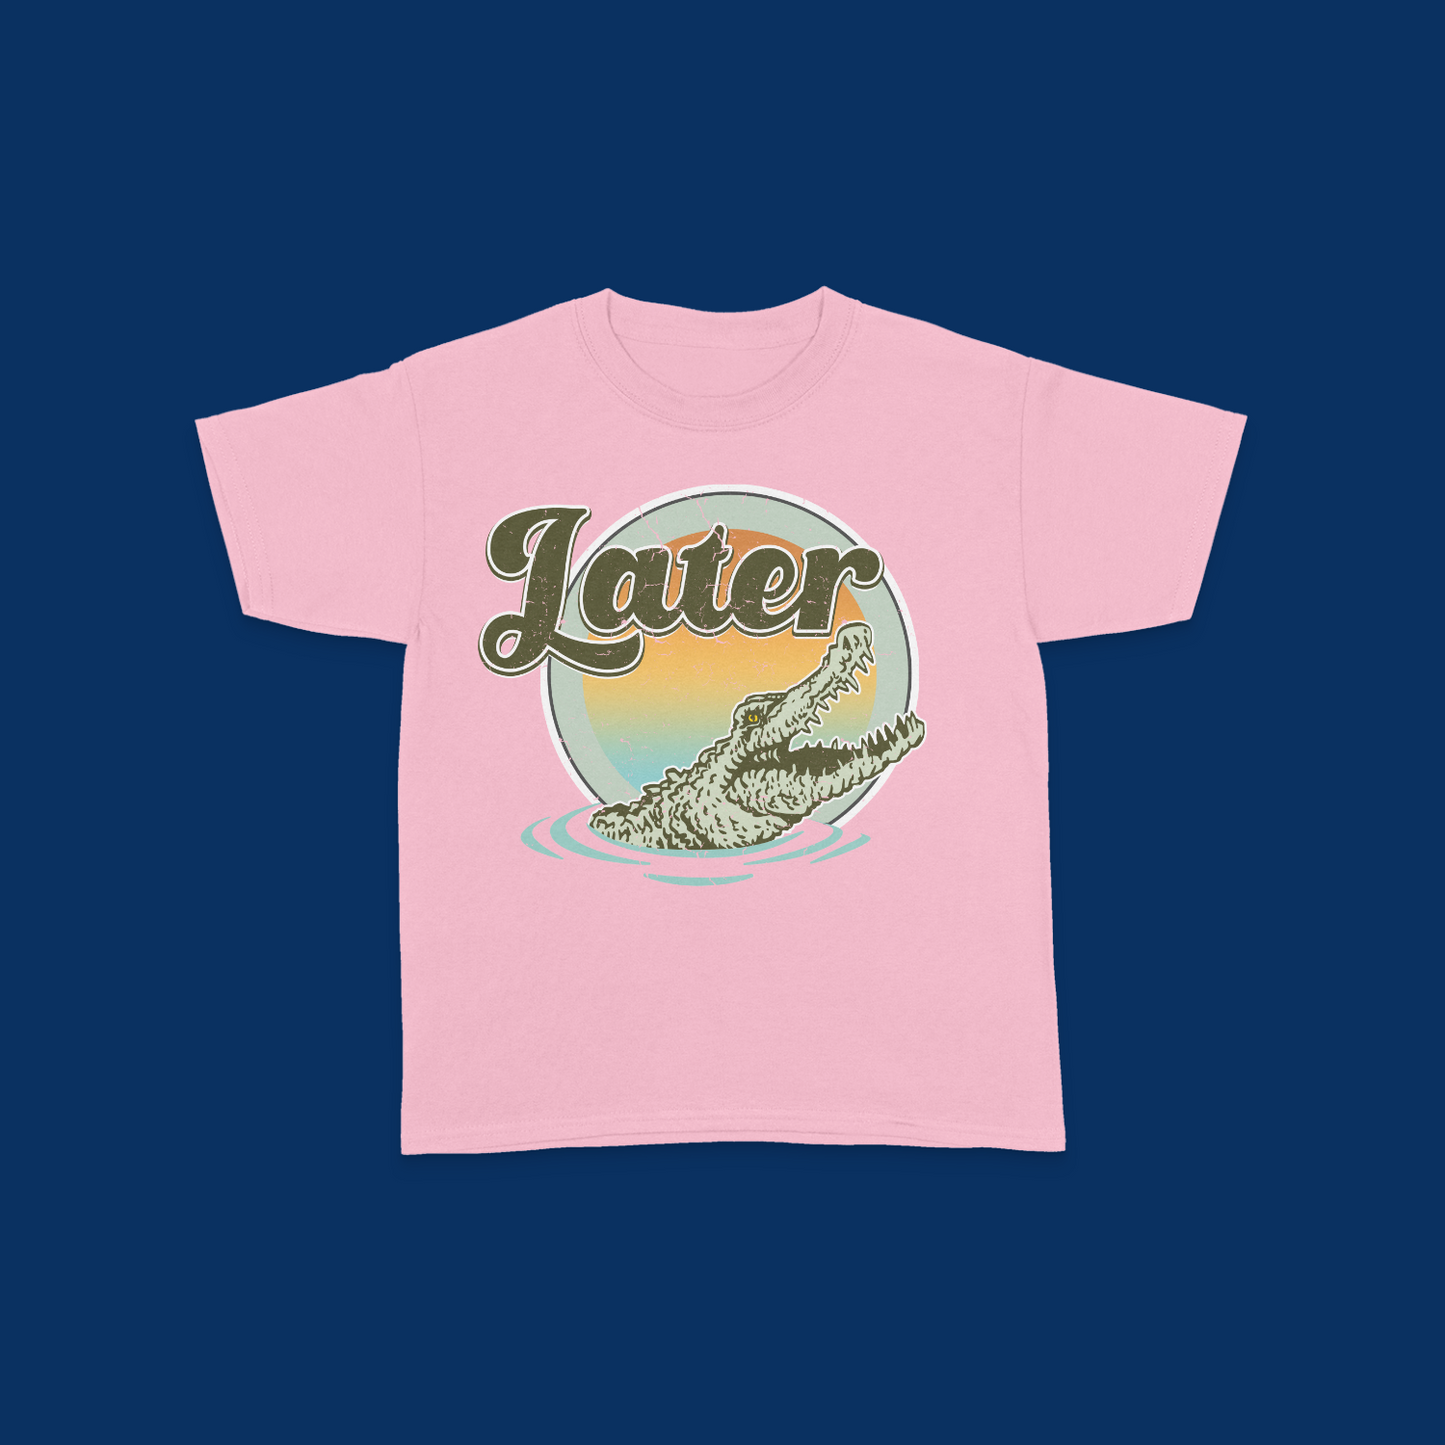 Later, Gator Kids T-Shirt